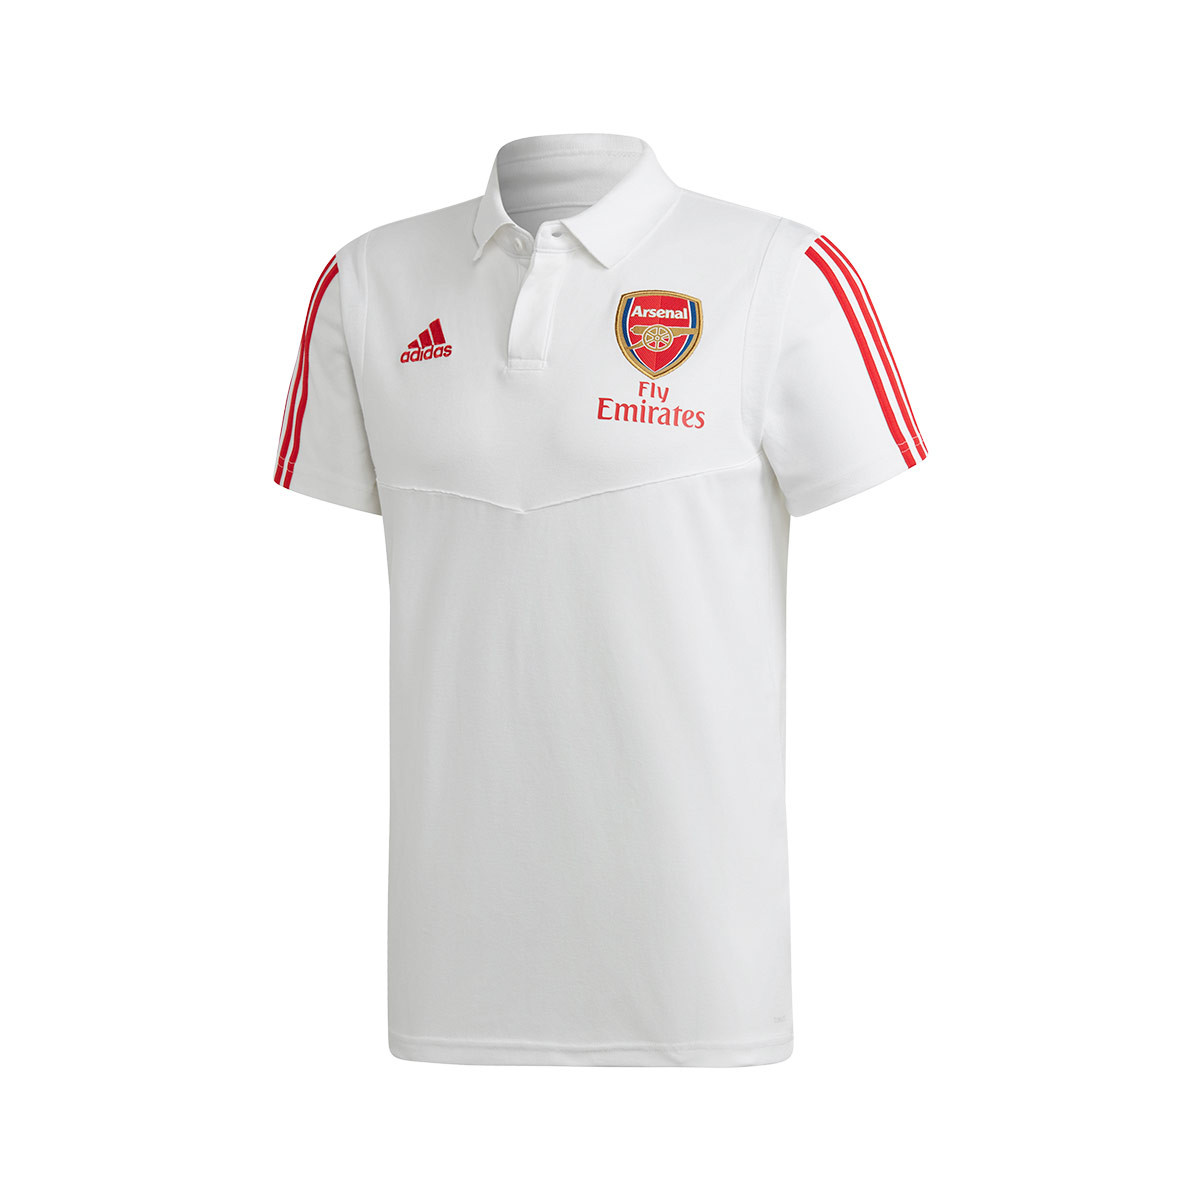 Polo Shirt Adidas Arsenal Fc 2019 2020 White Scarlet Football